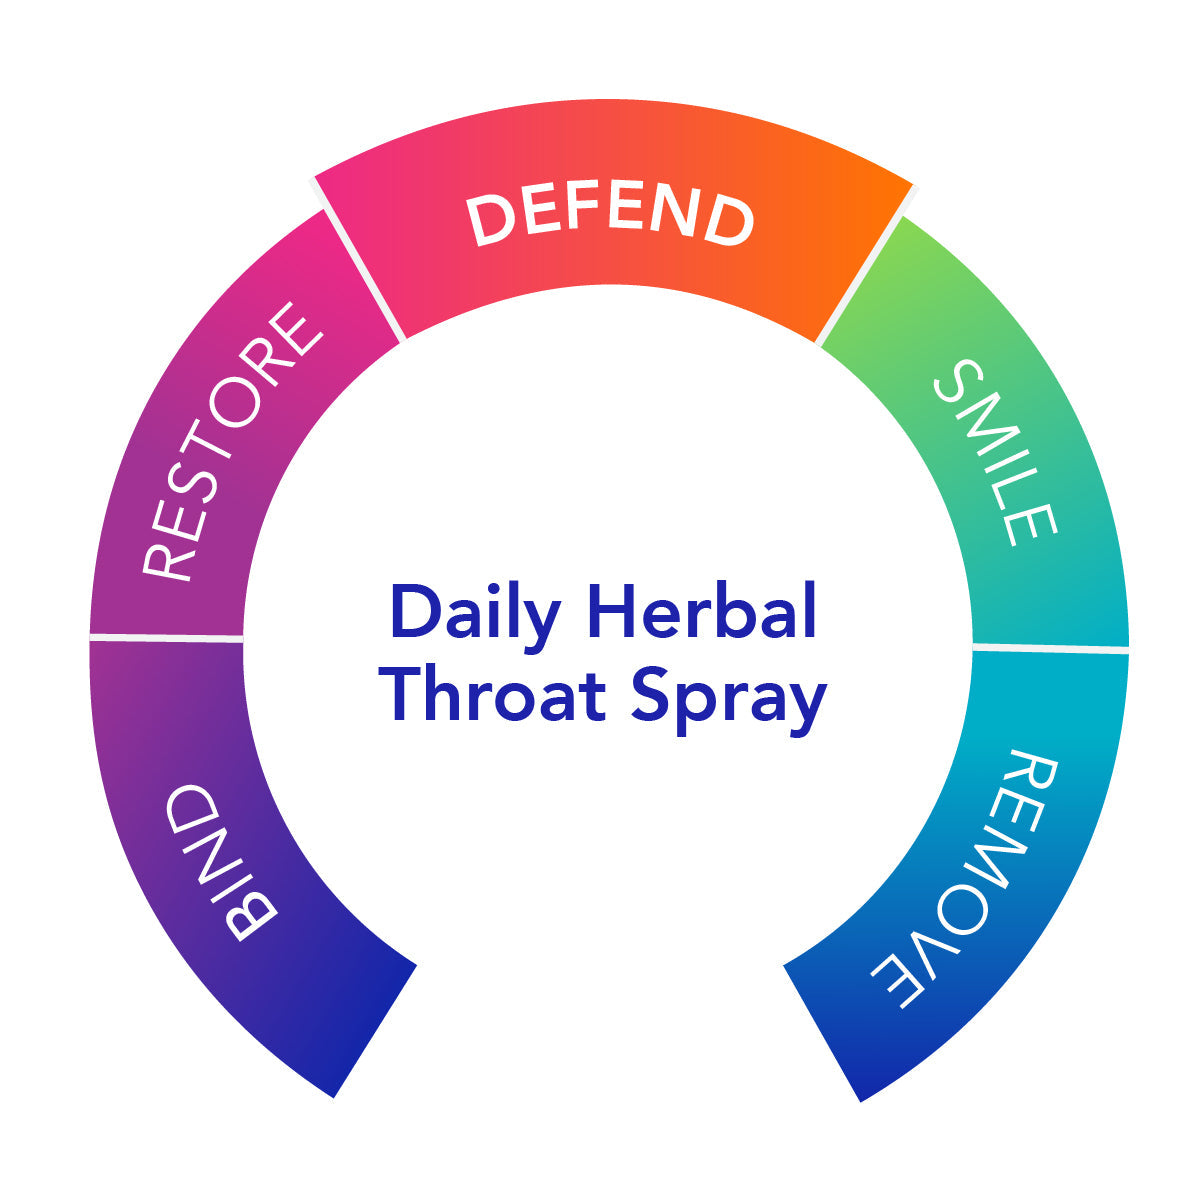 Biocidin®TS - Daily Herbal Throat Spray | Professional